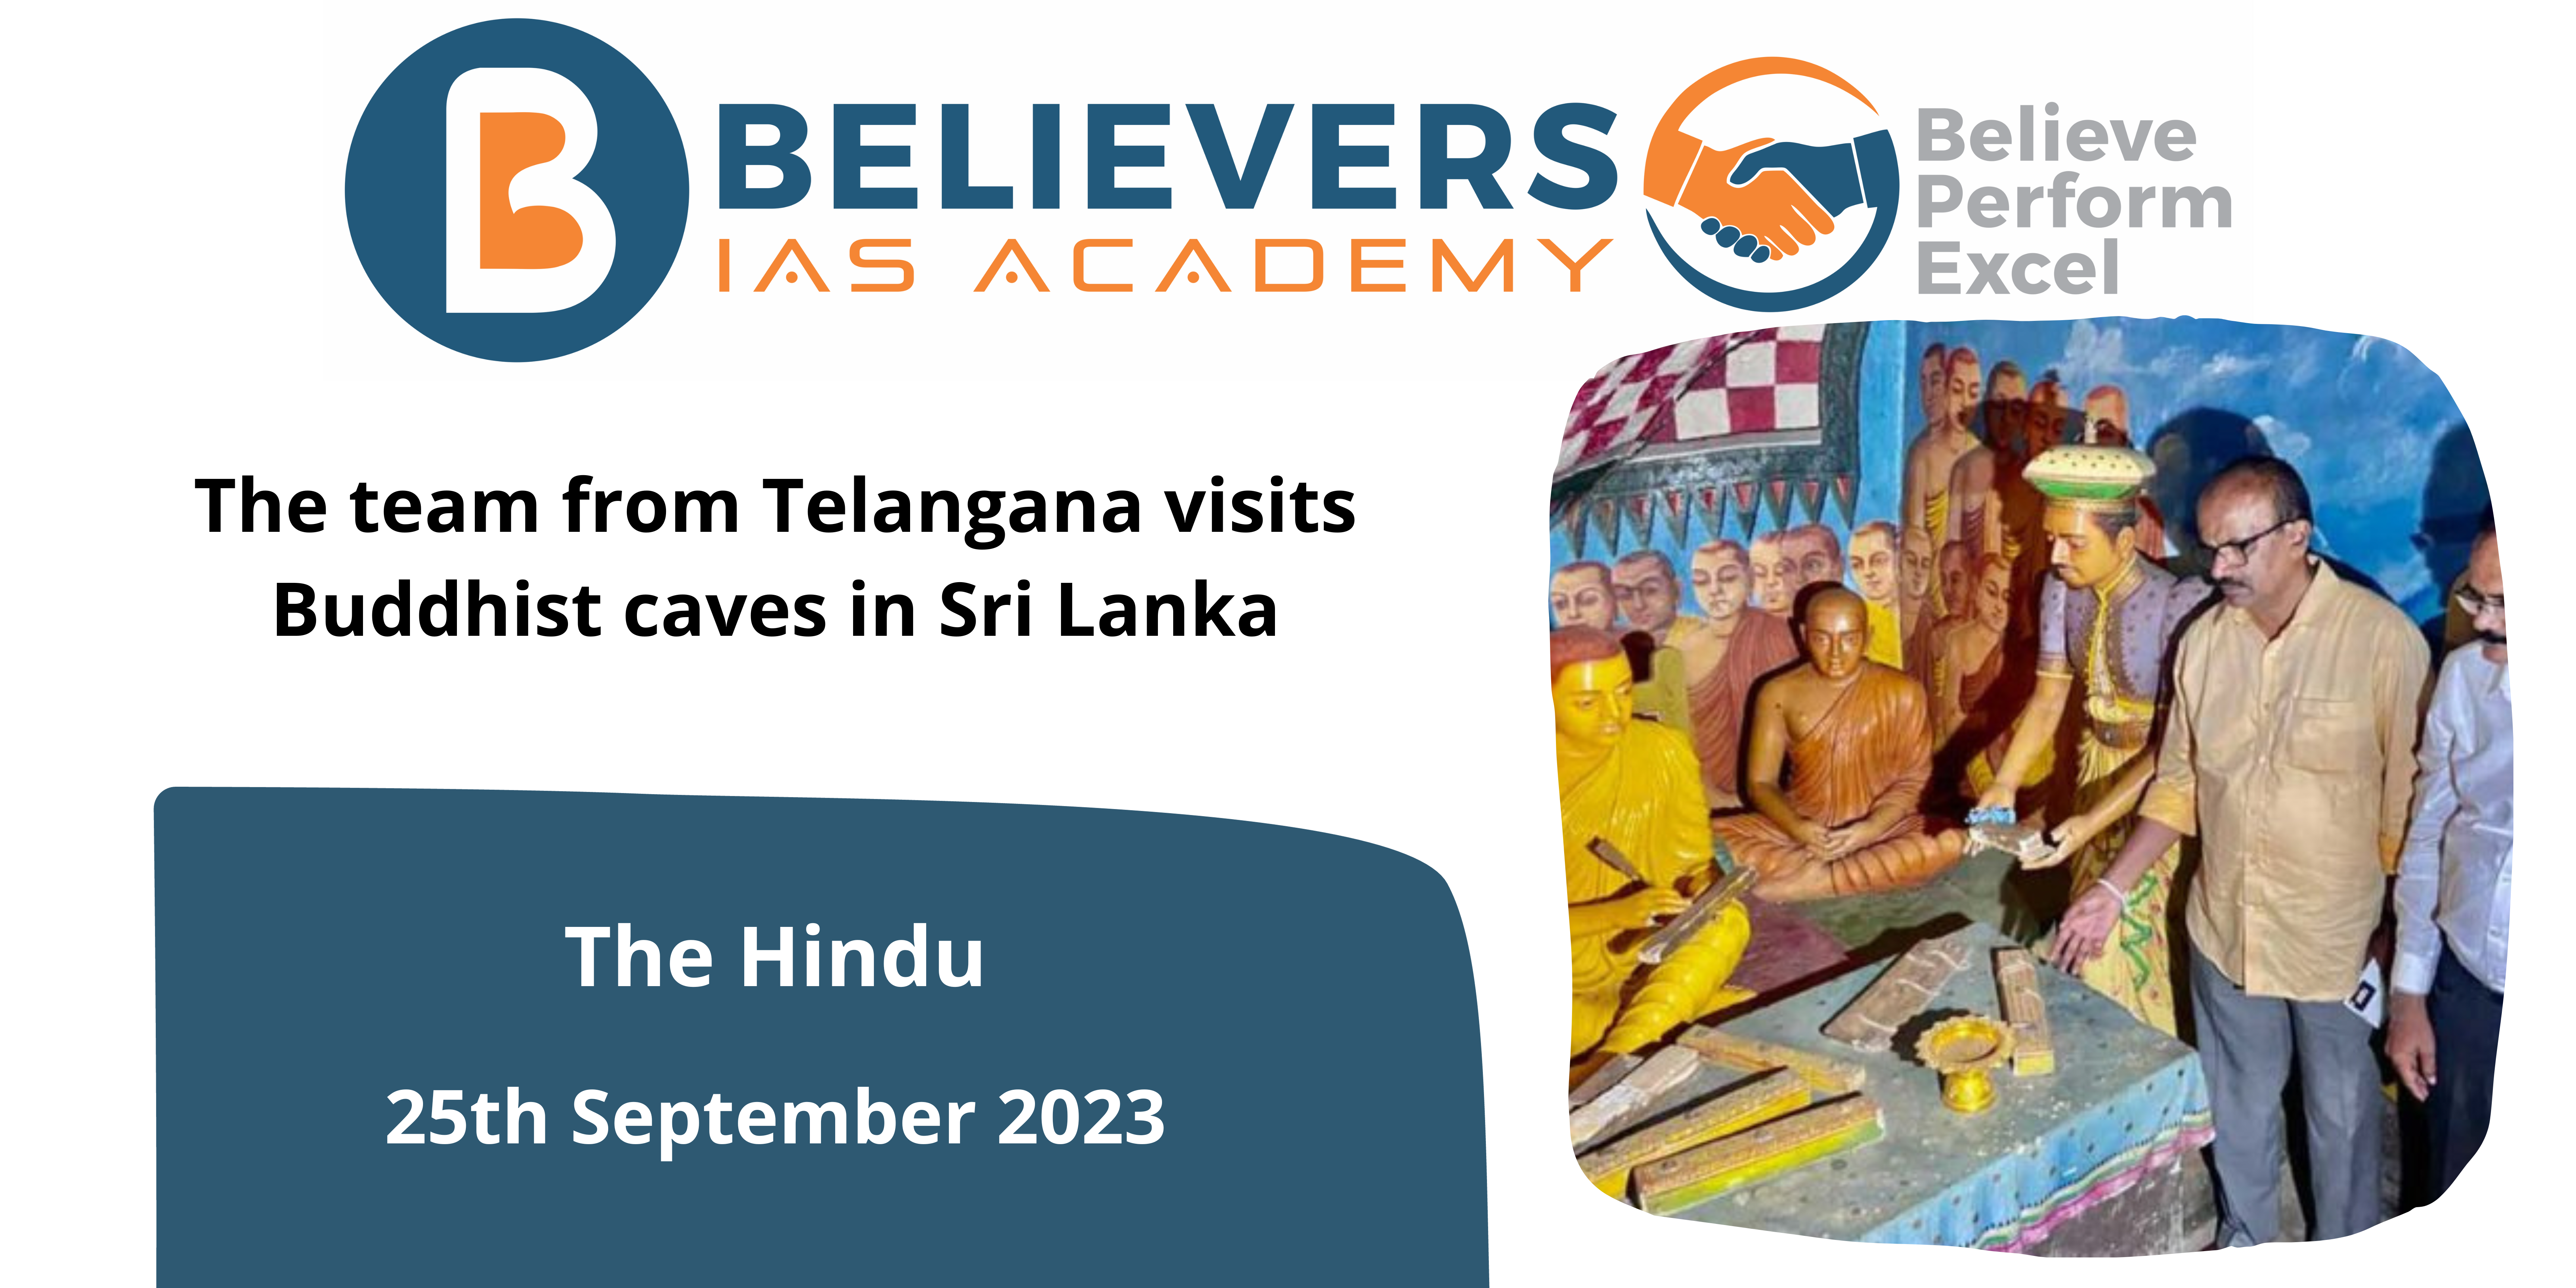 The team from Telangana visits Buddhist caves in Sri Lanka